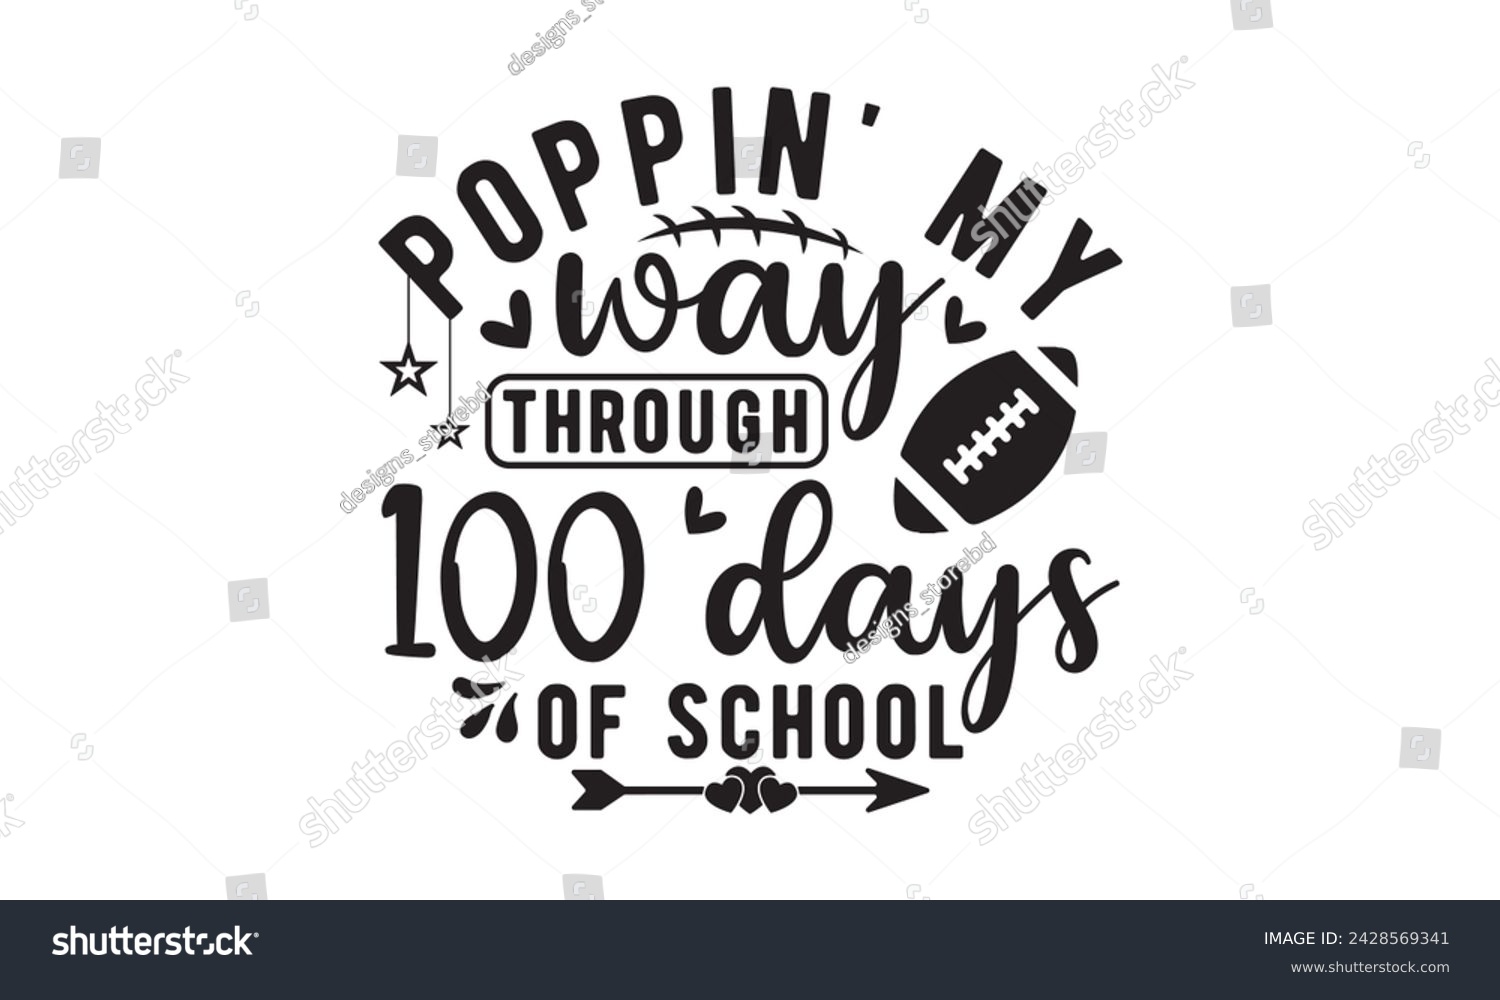 SVG of Poppin' my way through 100 days,100 Days of school svg,Teacher svg,t-shirt design,Retro 100 Days svg,funny 100 Days Of School svg,Printable Vector Illustration,Cut Files Cricut,Silhouette,png,Laser cu svg